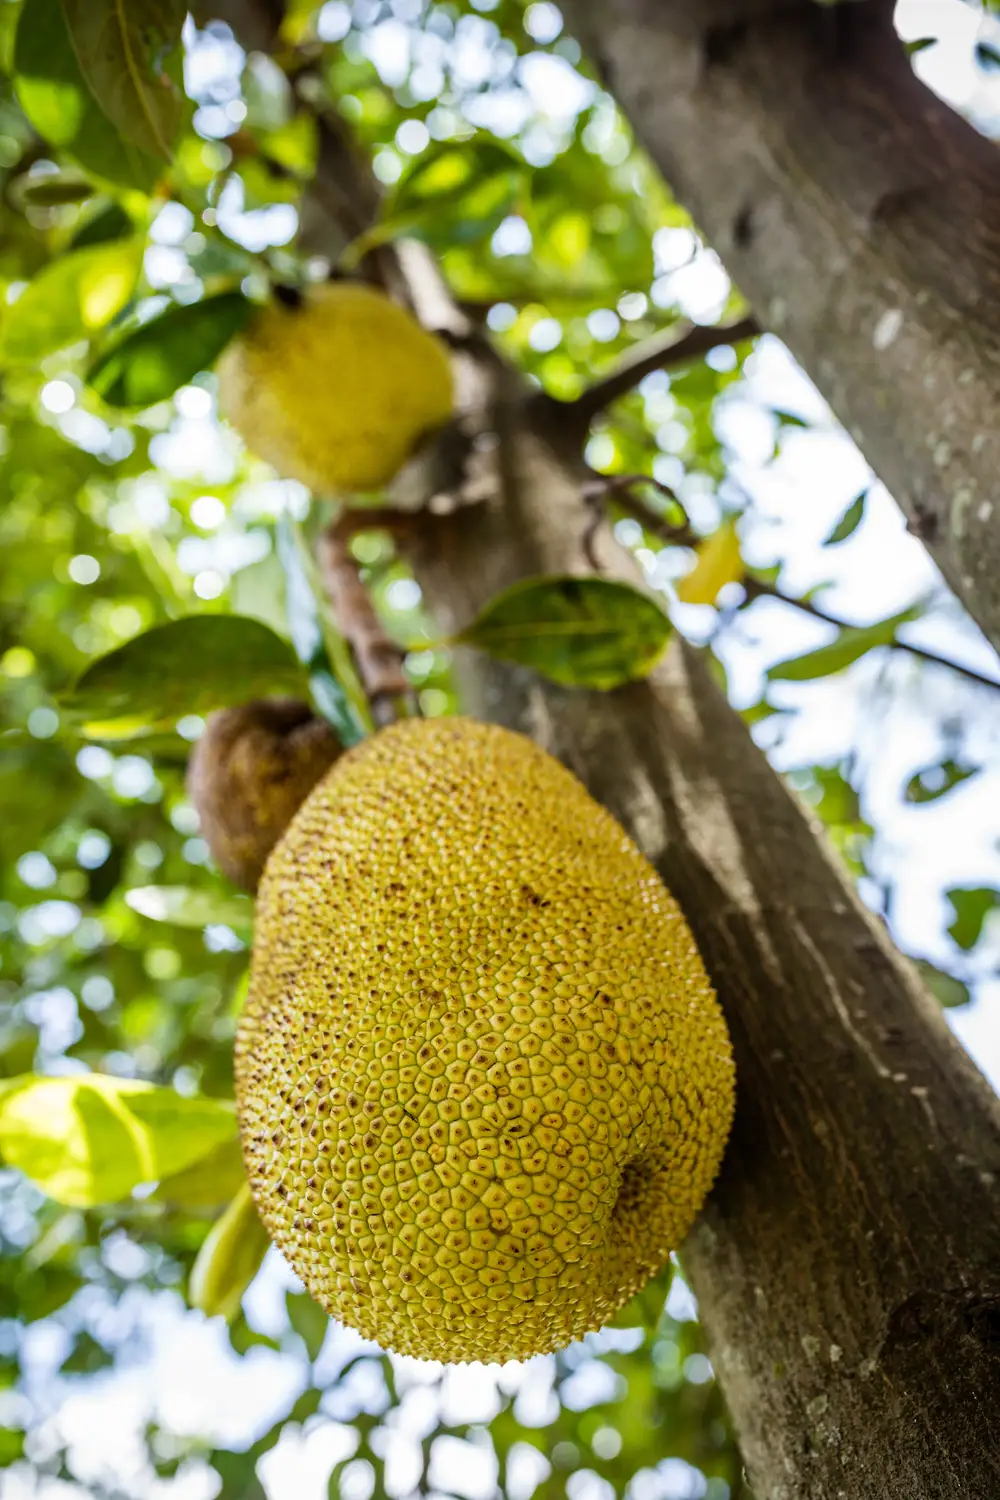 Jackfruit growing on a tree